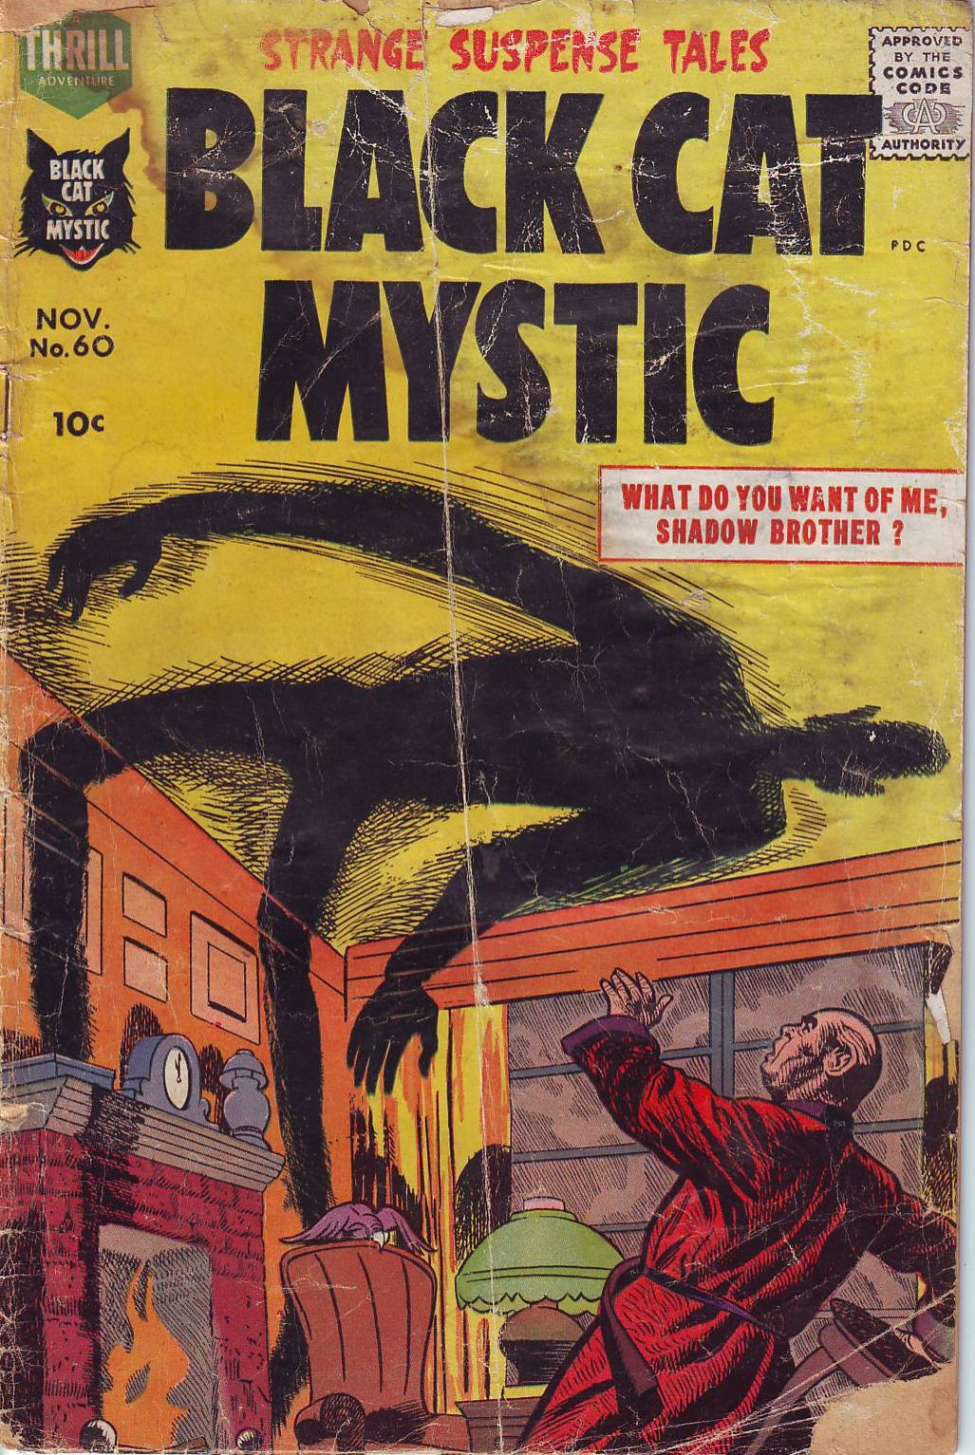 Comic Book Cover For Black Cat 60 (Mystic)